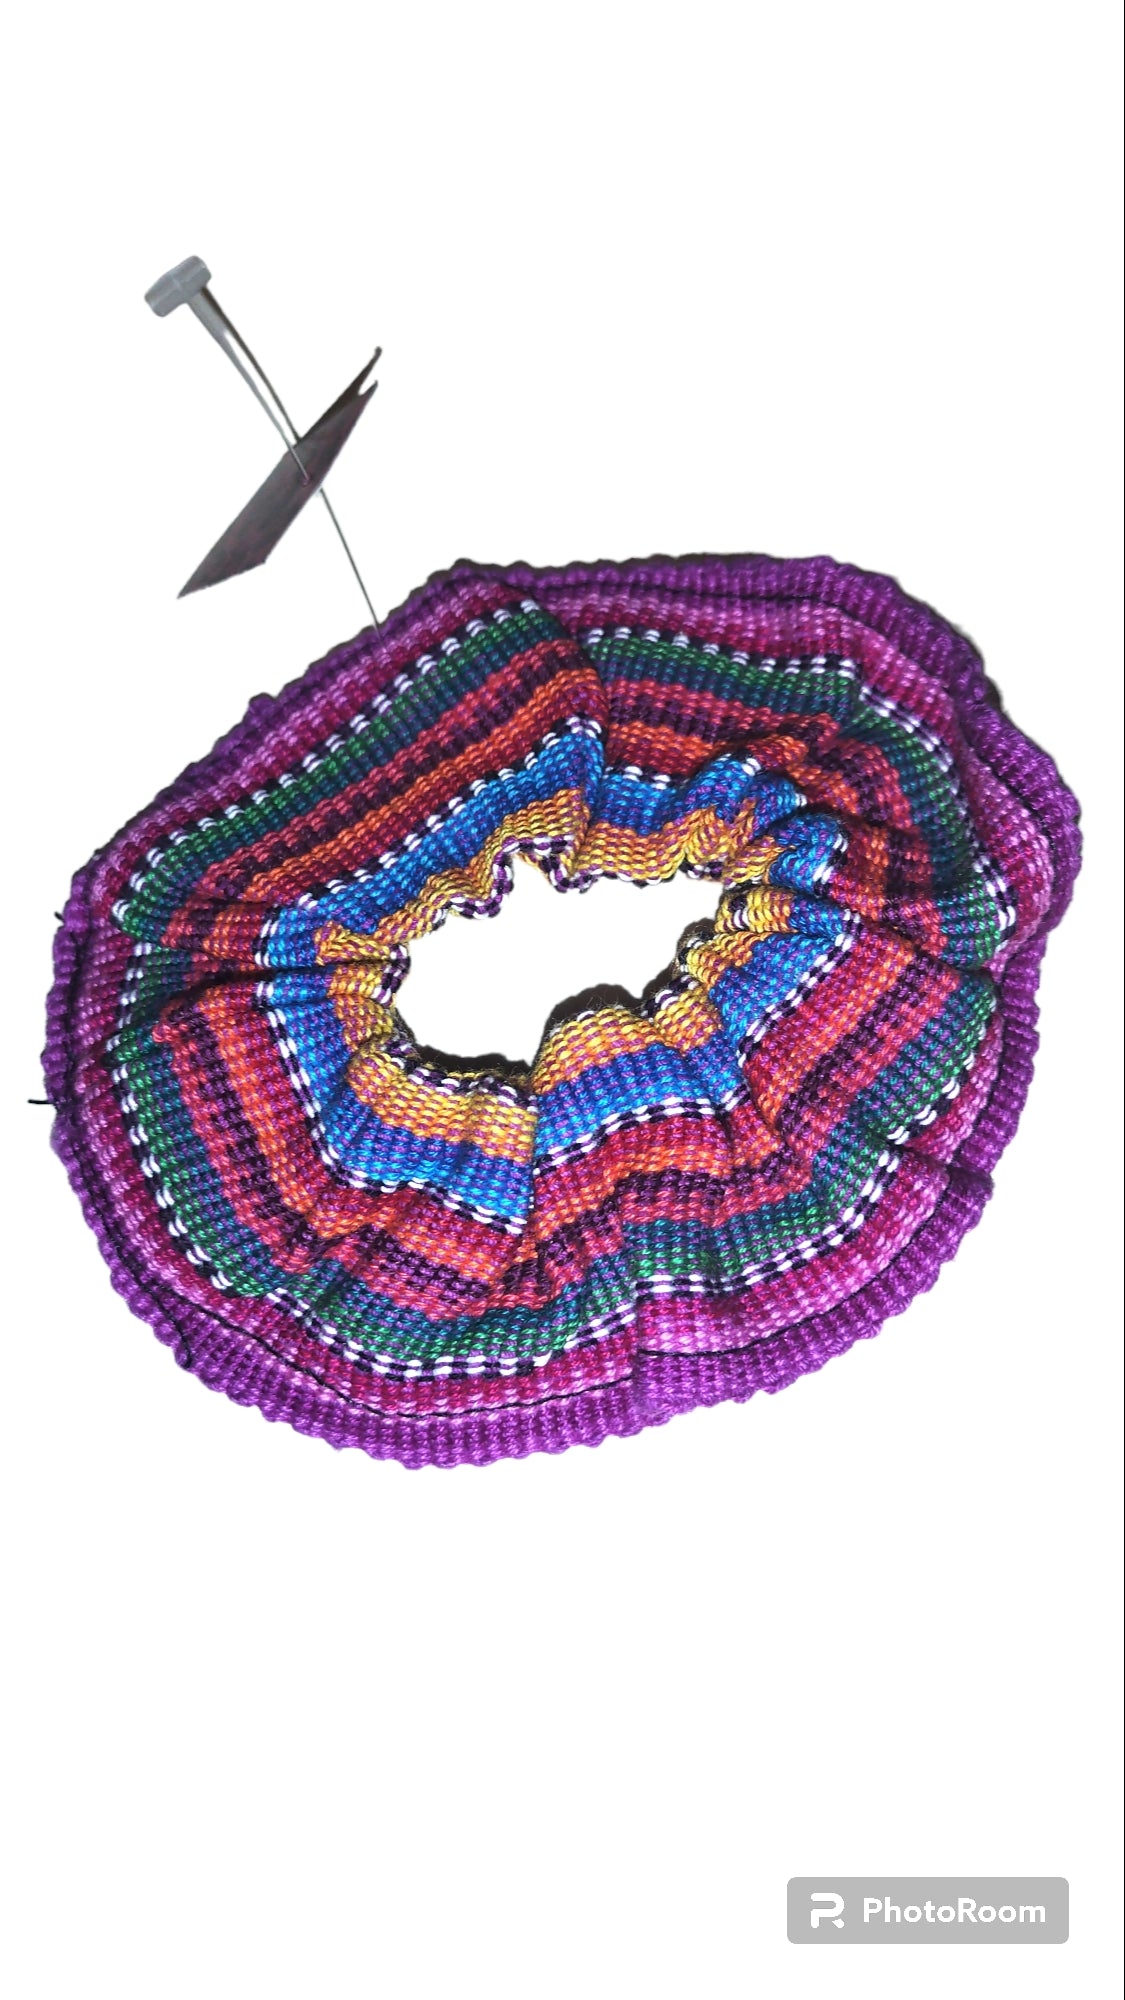 Guatemala Cotton Hair Scrunchies Tie Elastic Woven Multicolored